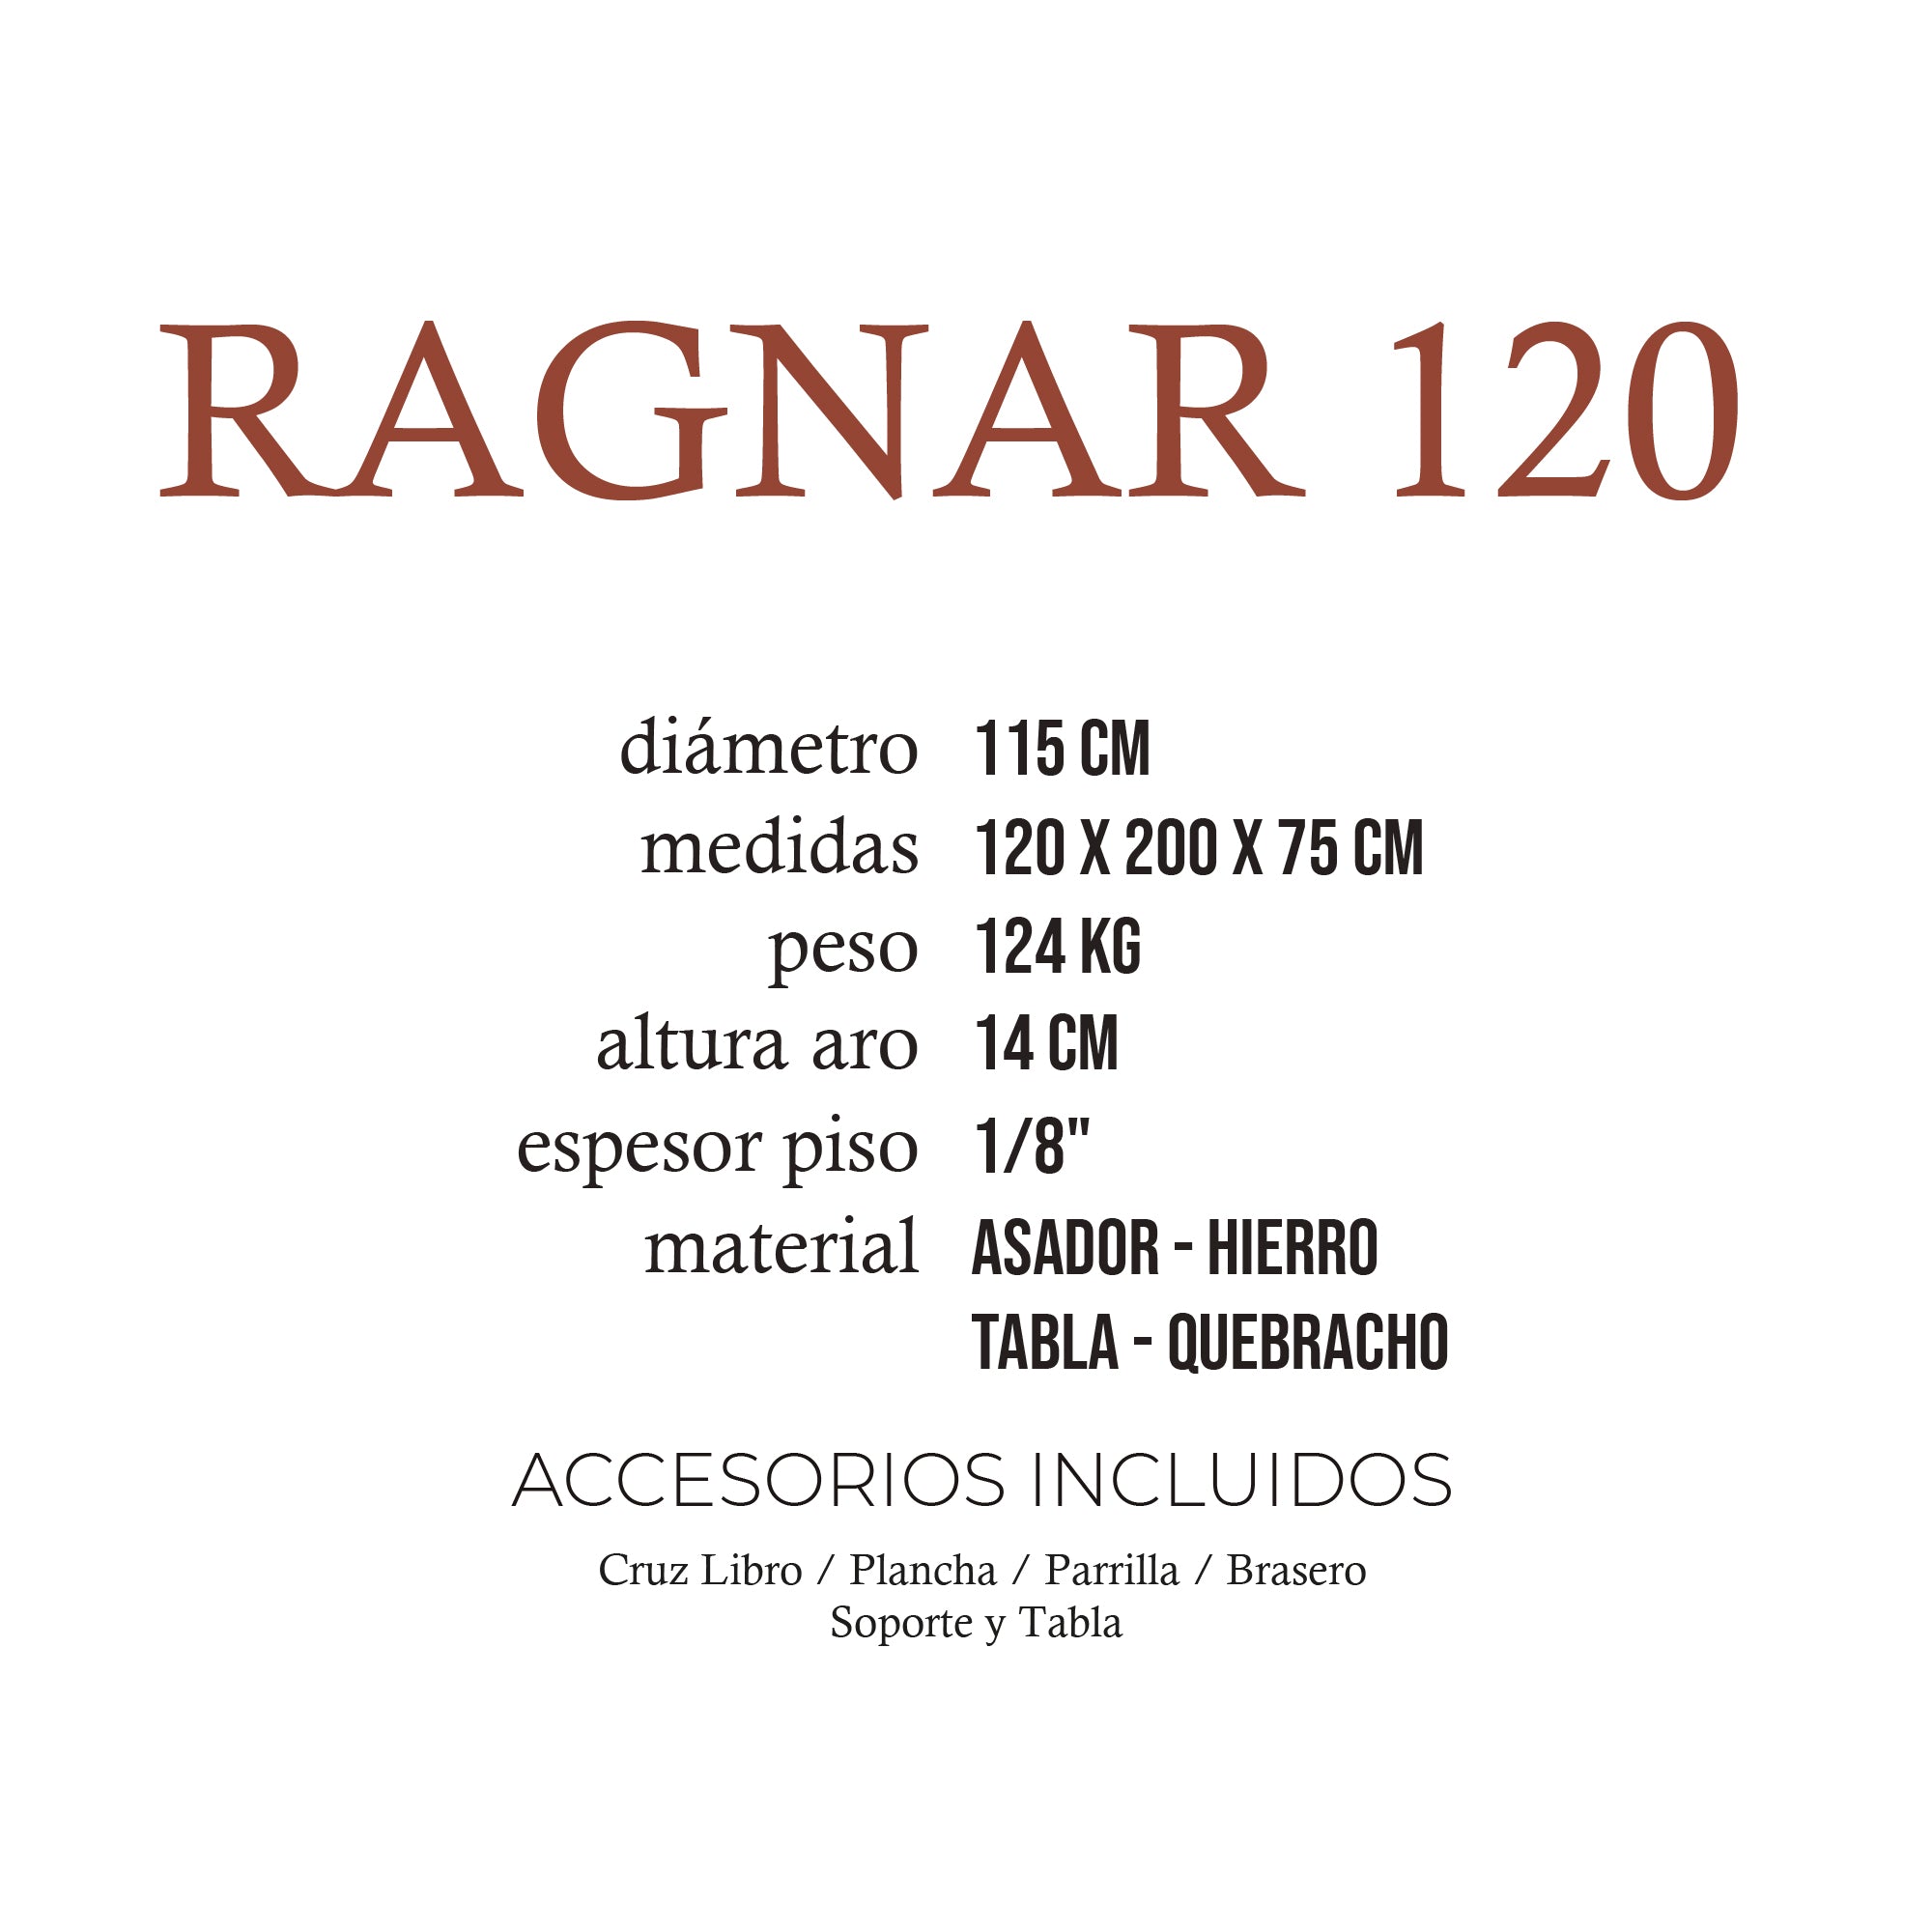 Ragnar 120